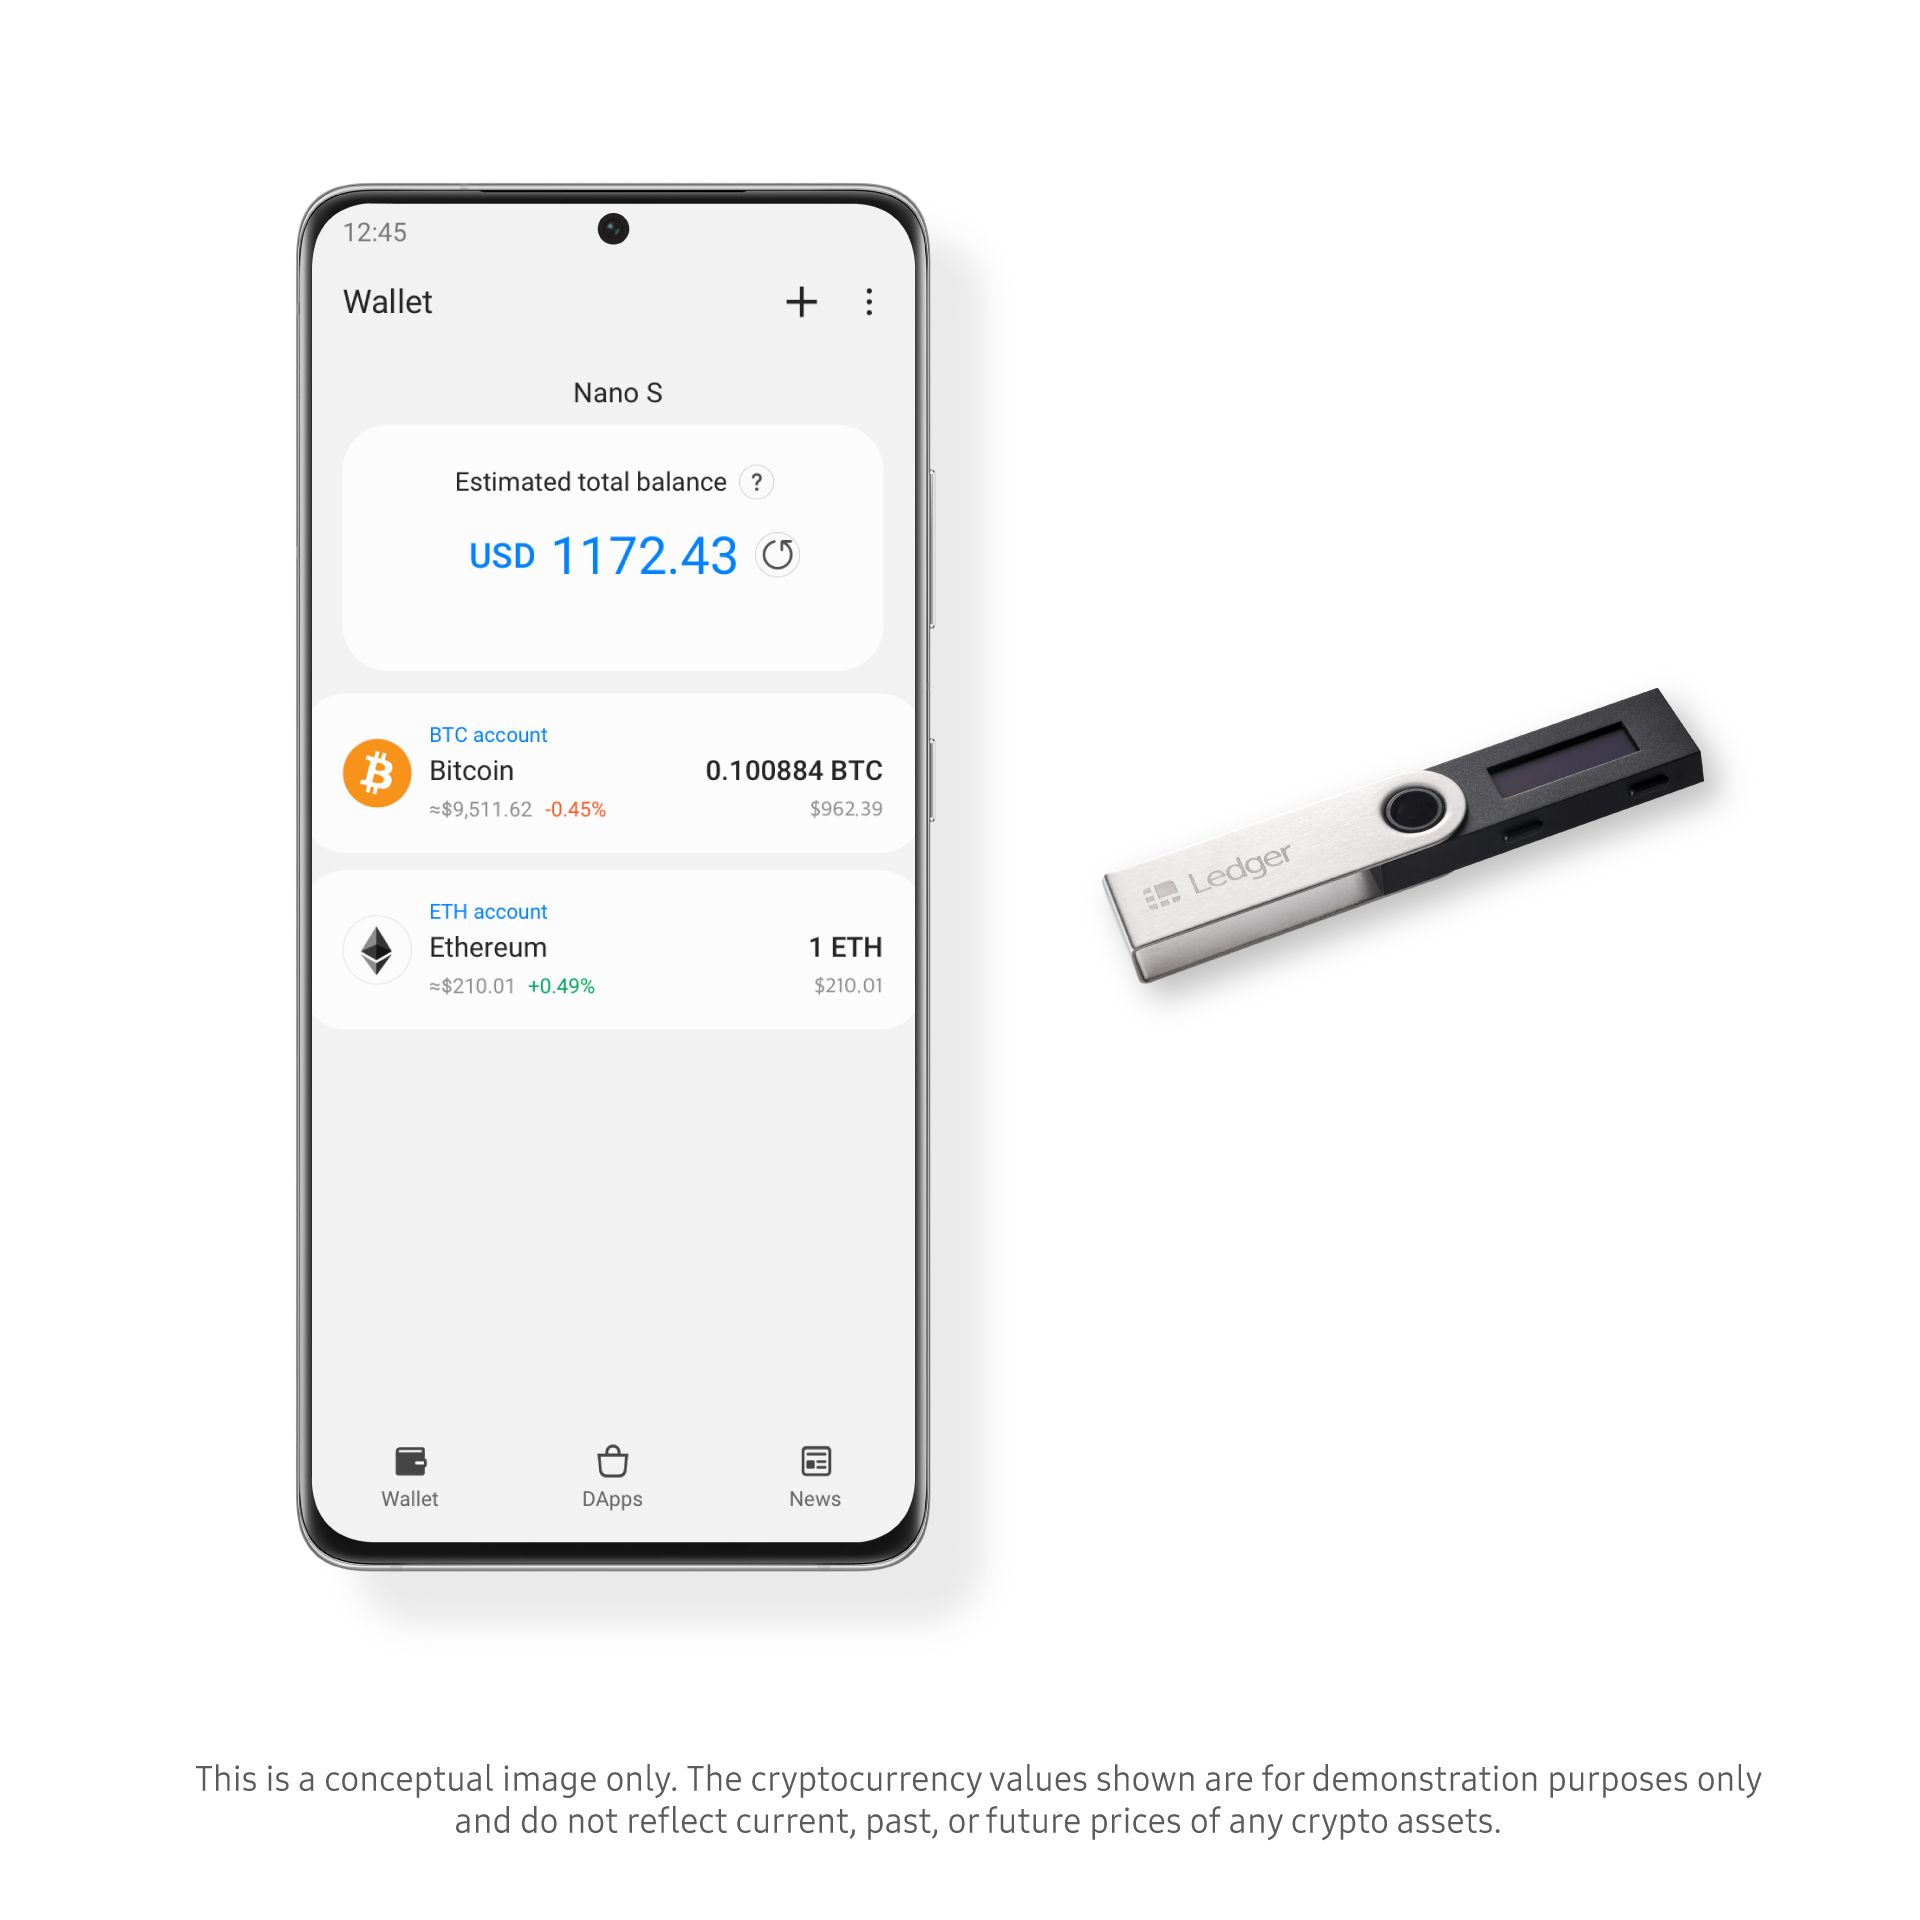 Samsung Blockchain Wallet and Nano S Ledger